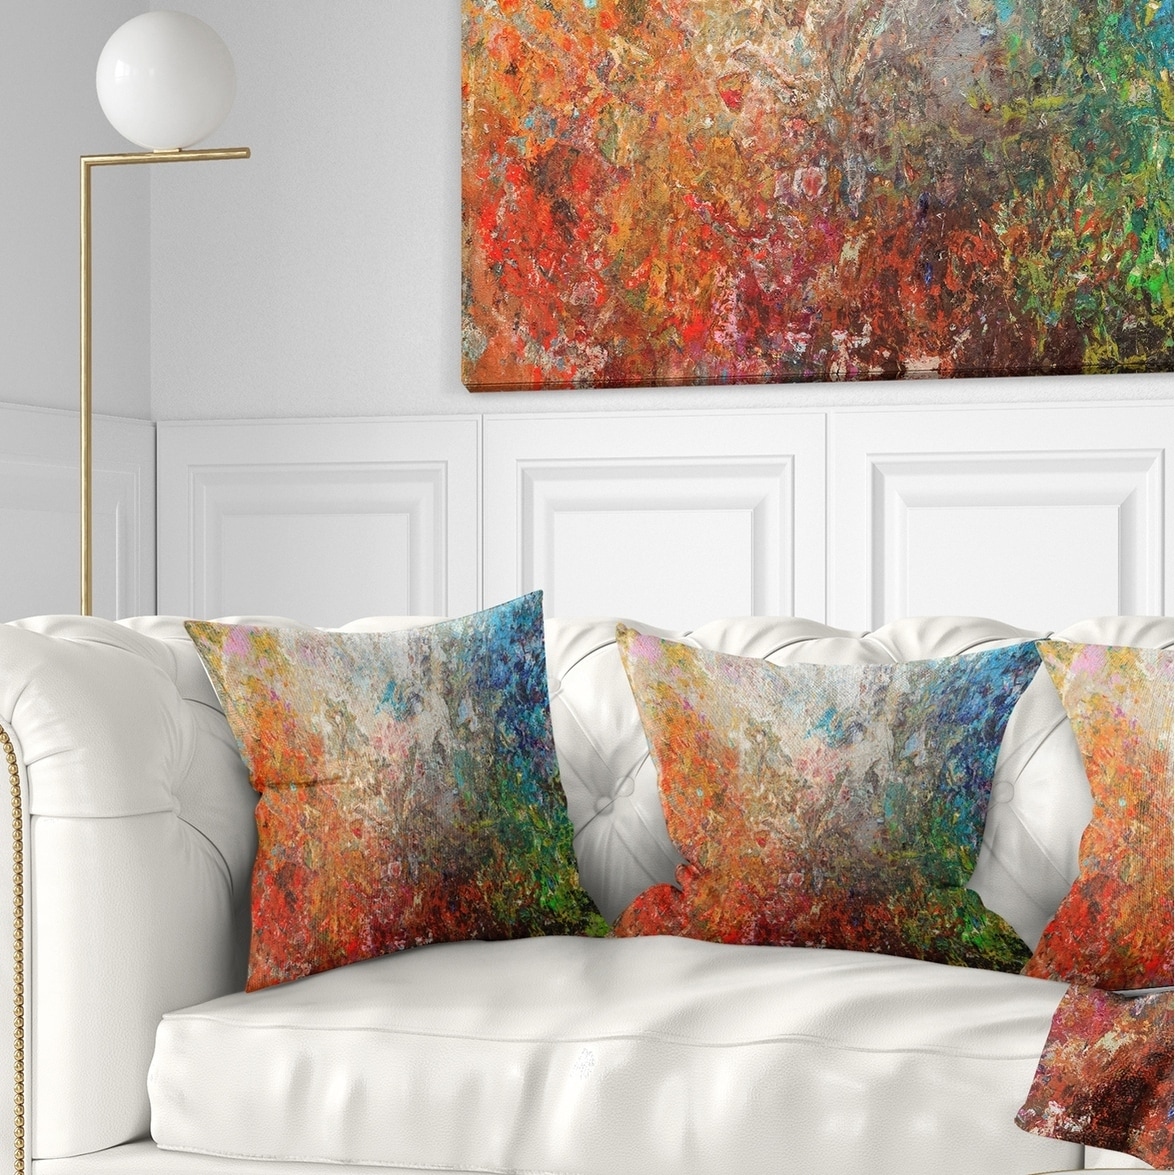 16 Round Designart CU15750-16-16-C White Blocks Abstract Throw Cushion Pillow Cover for Living Room Sofa 